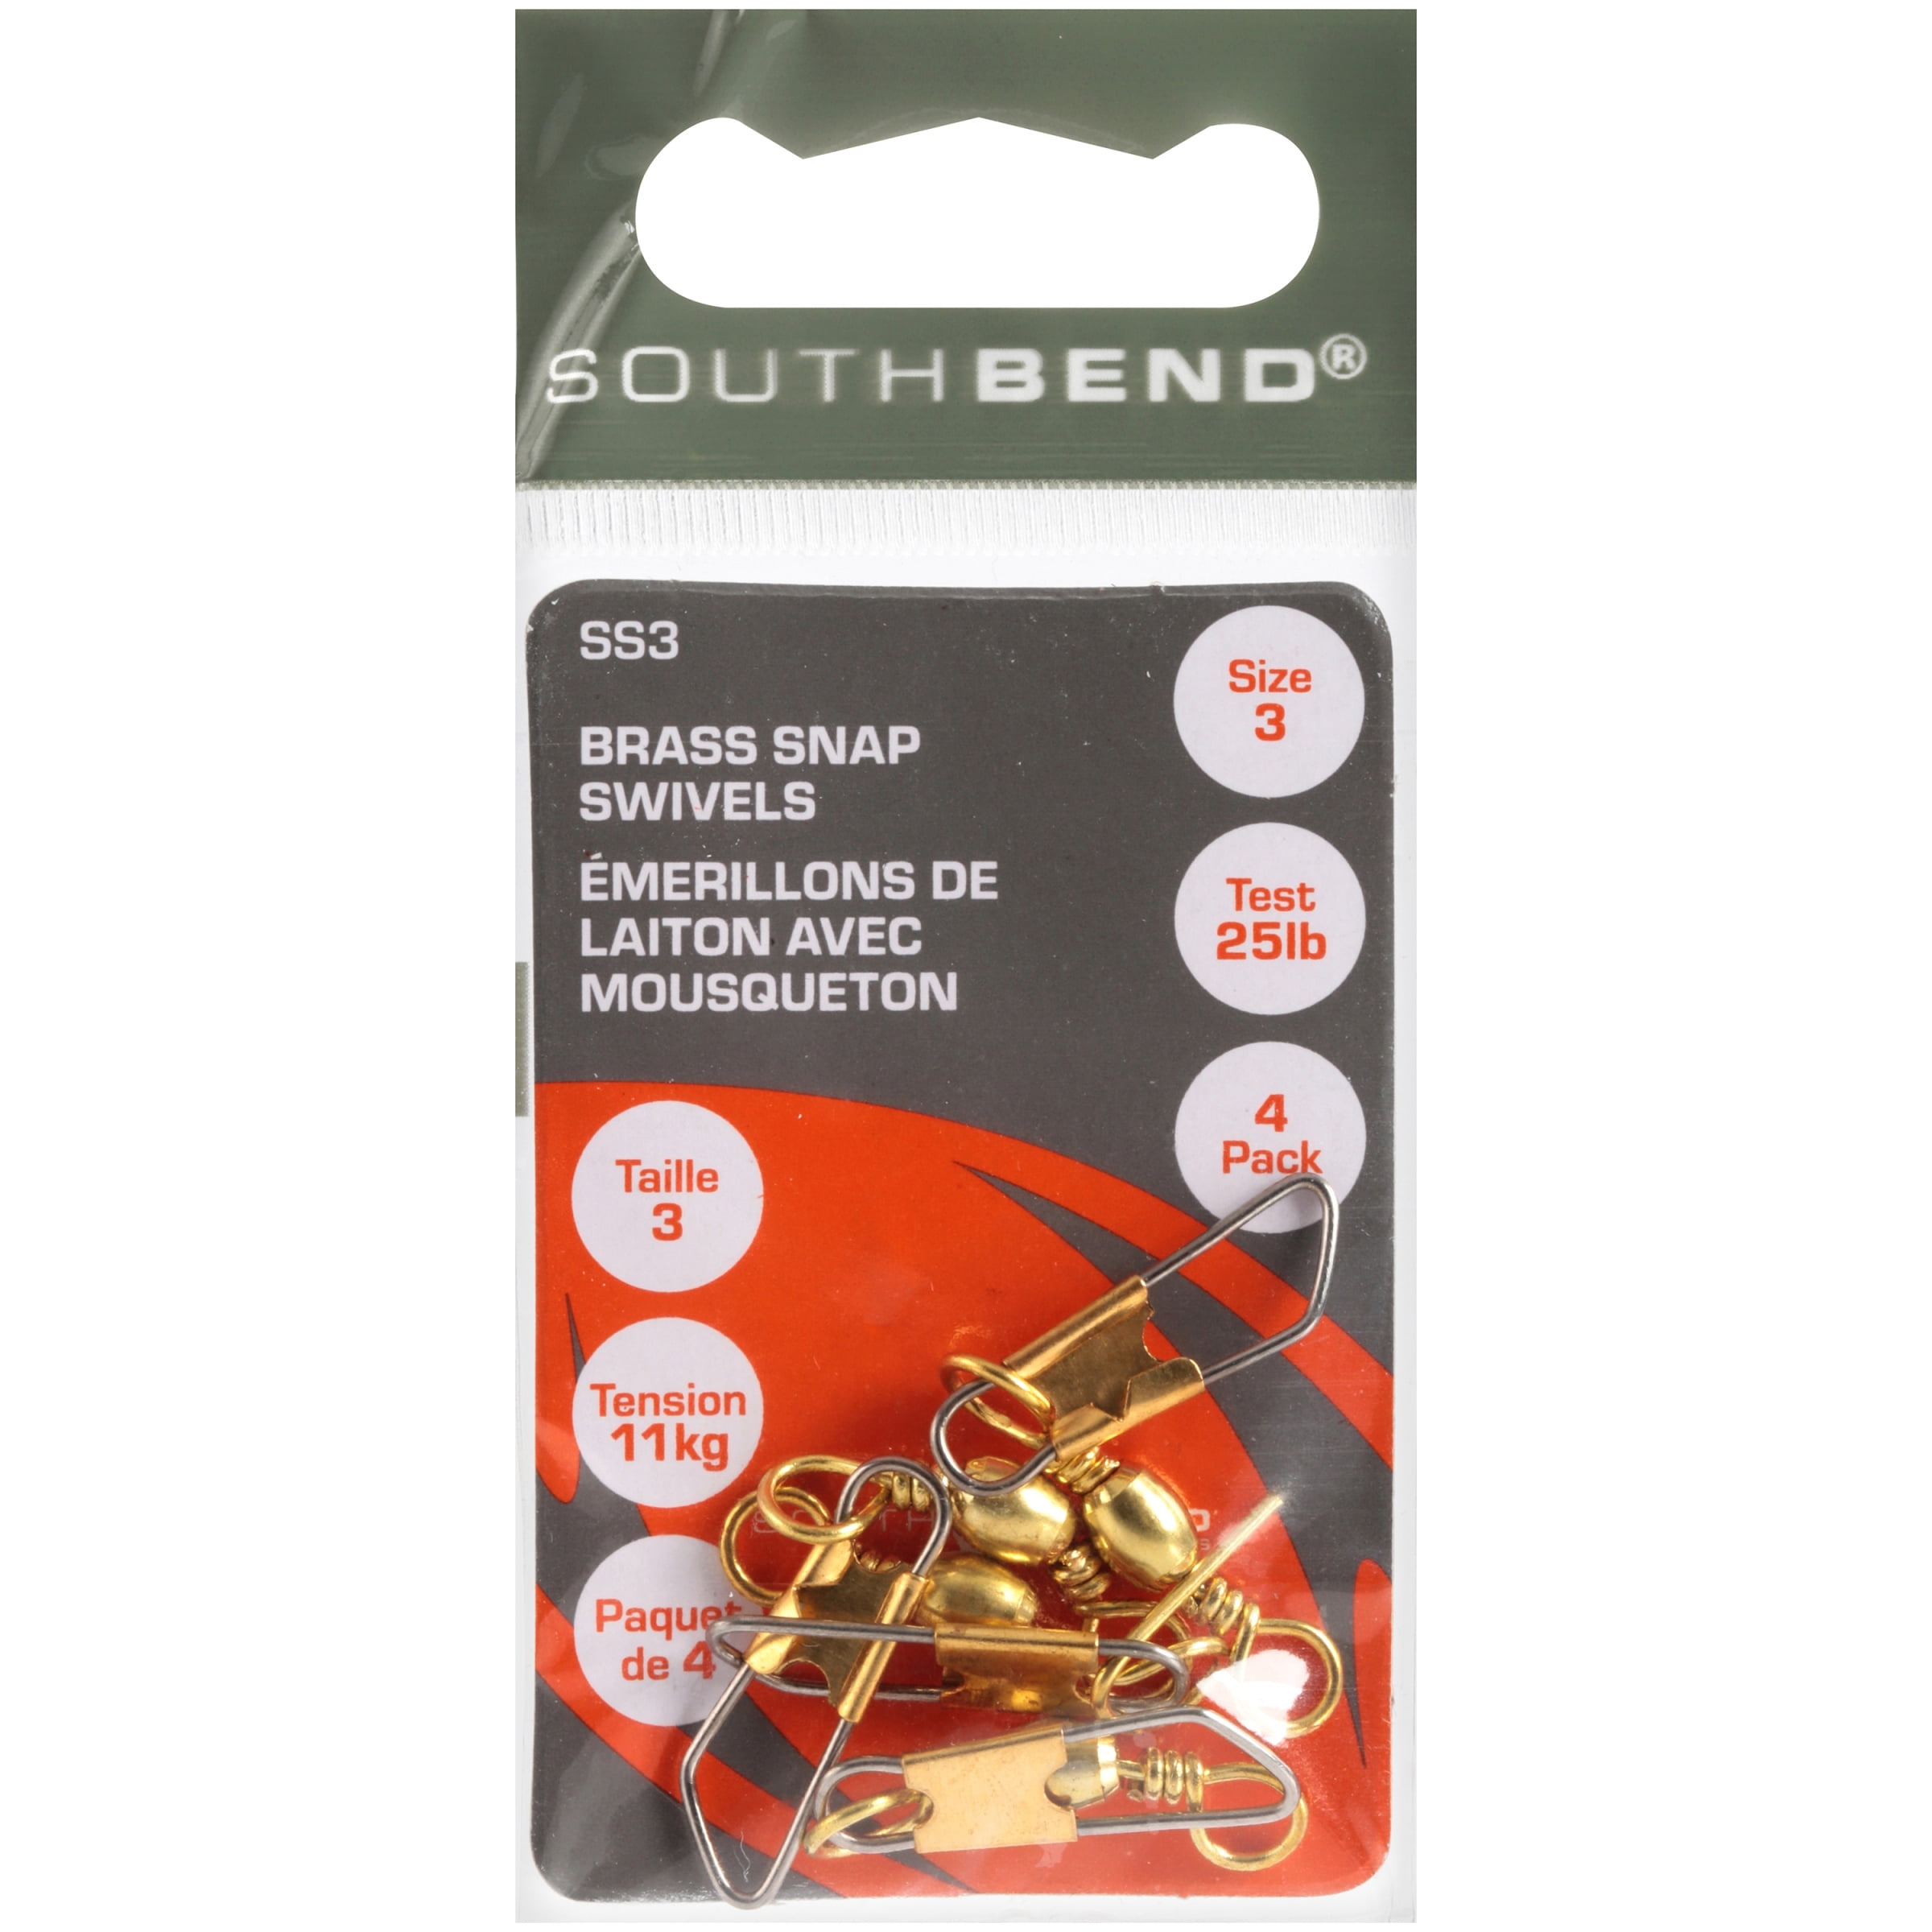 South Bend Brass Barrel Swivels 8 pack 25lb Test Size 12 